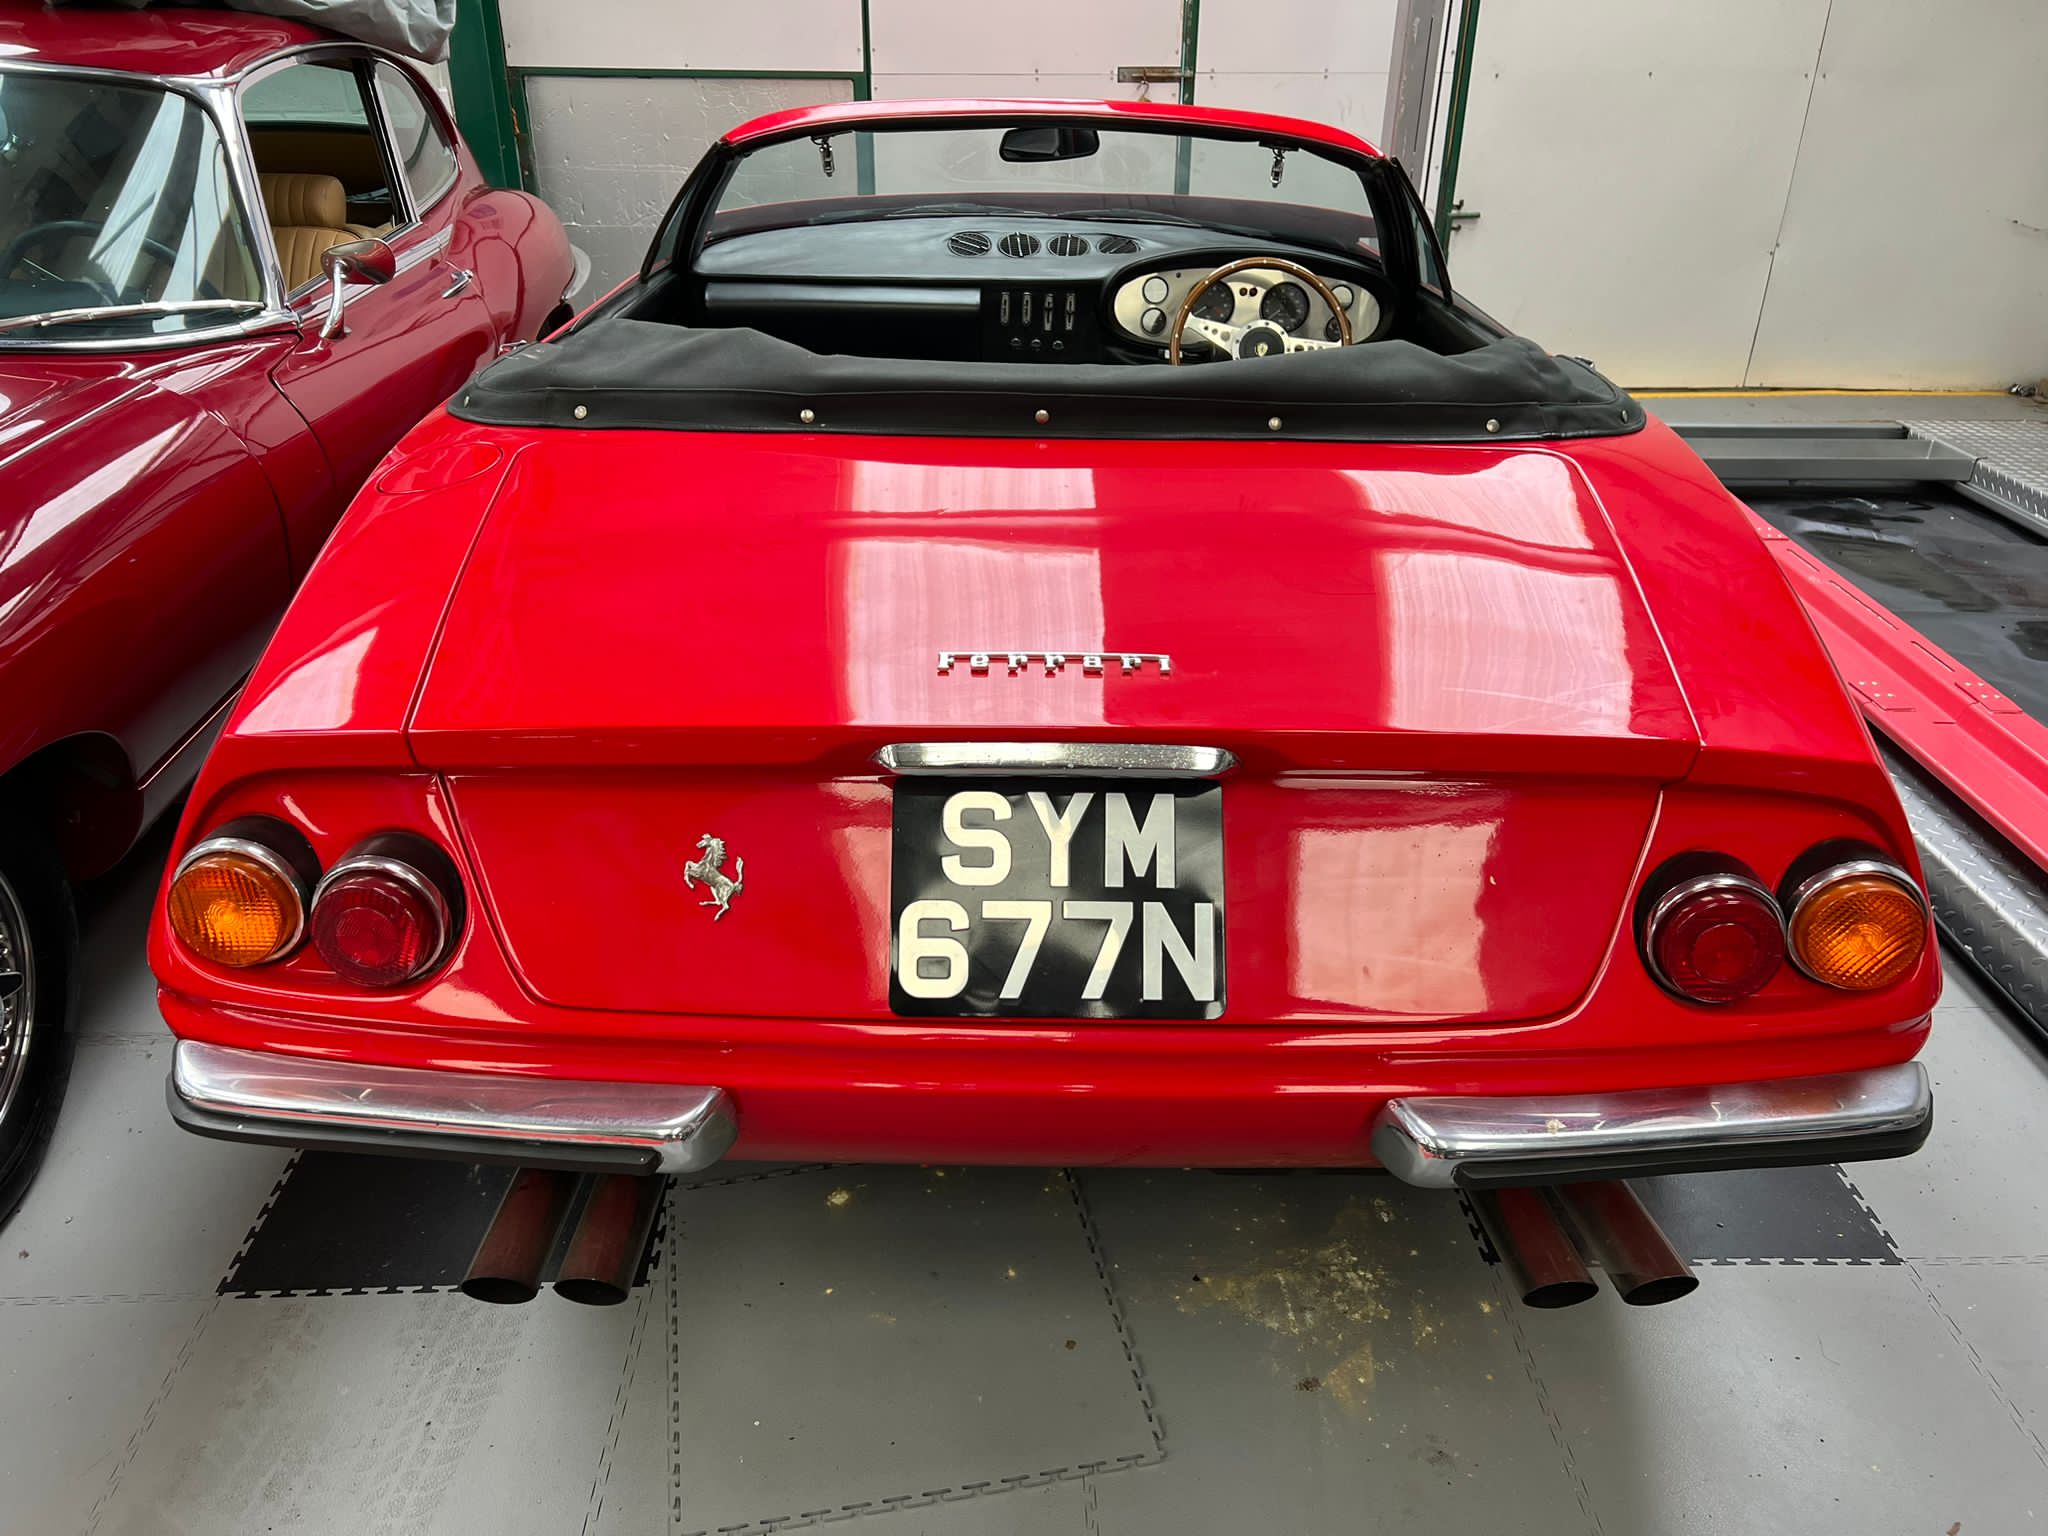 Southern Roadcraft 5.3L Daytona V12 Spyder - Ferrari Recreation - Image 25 of 26